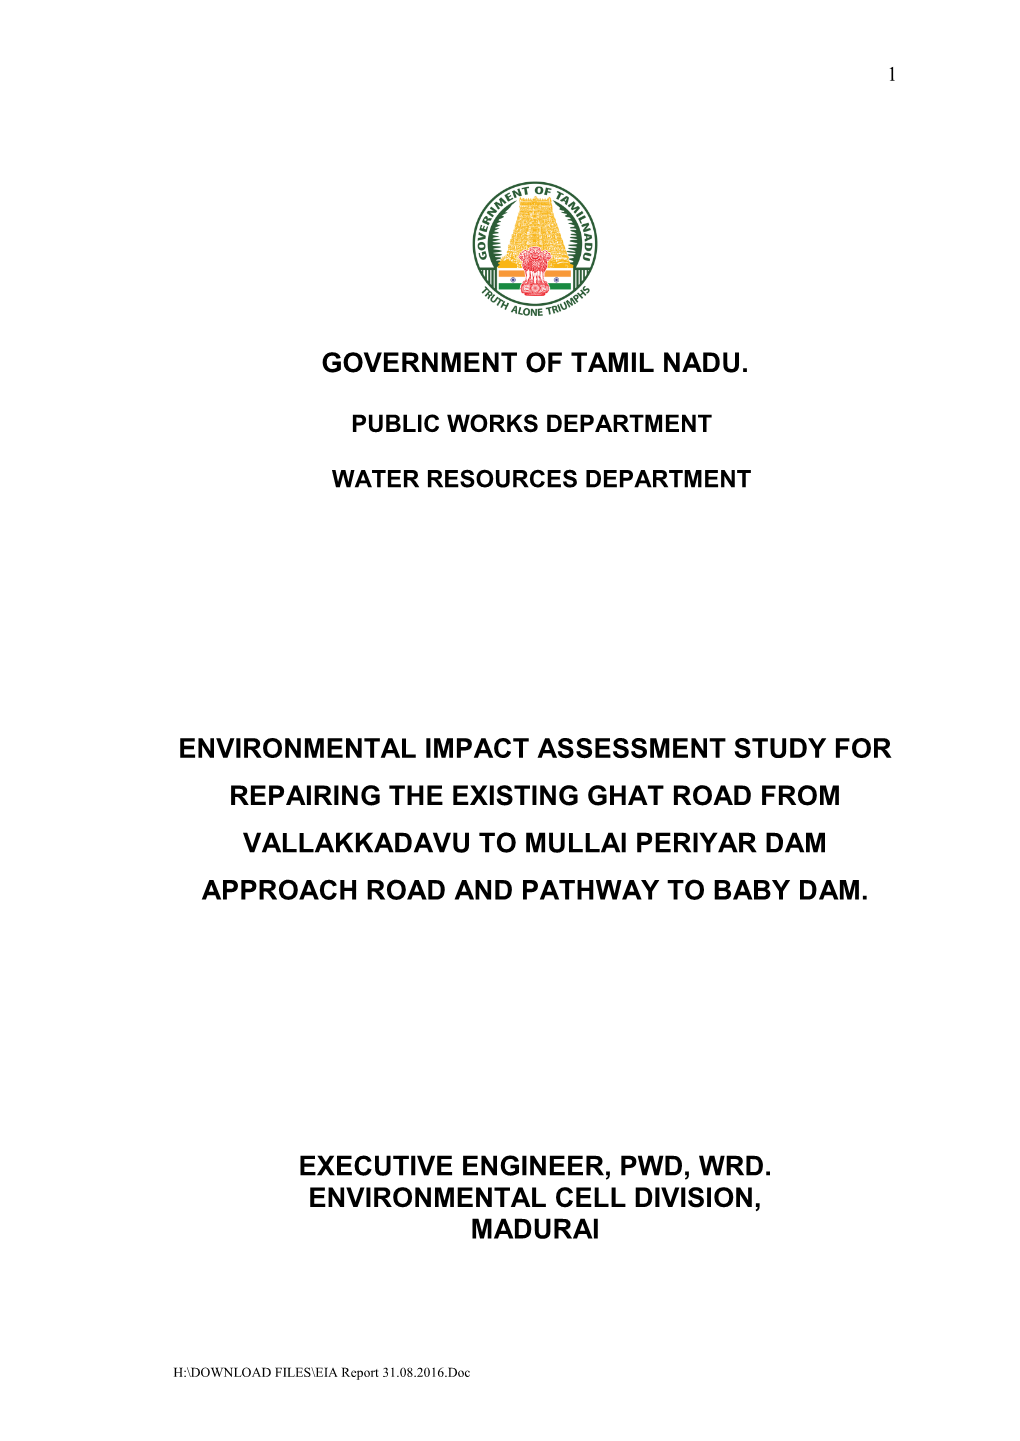 Government of Tamil Nadu. Environmental Impact